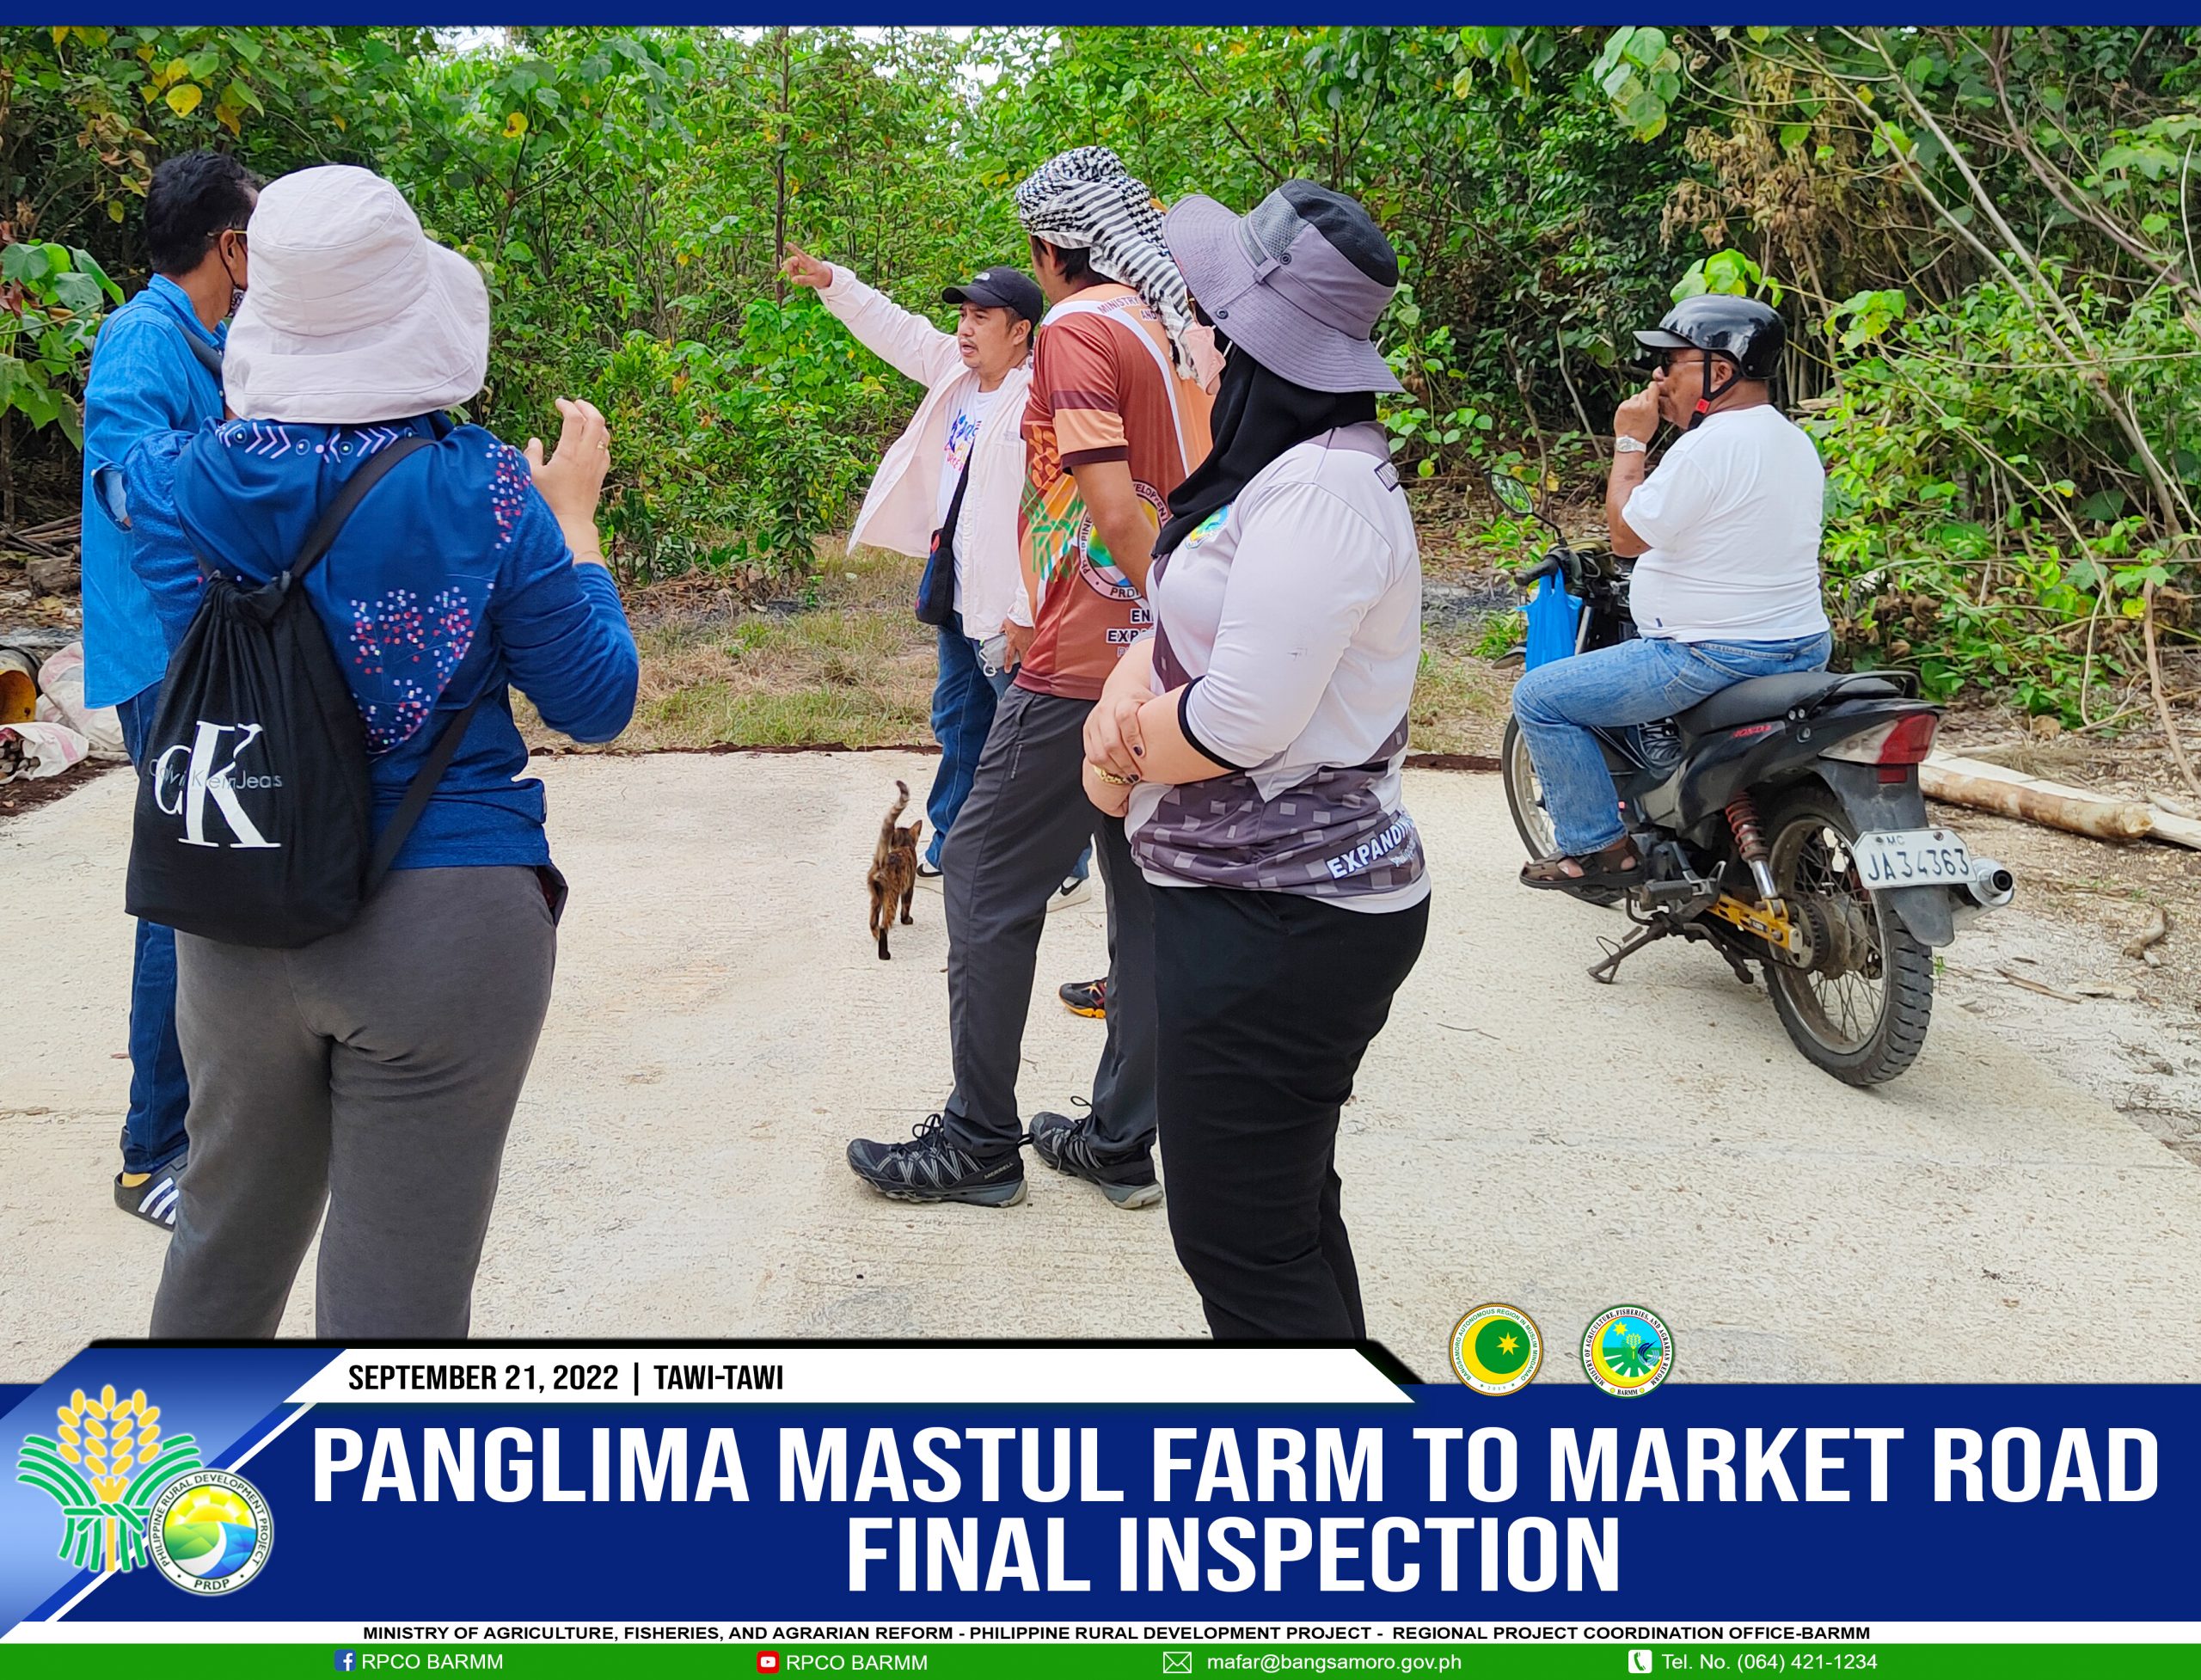 Panglima Mastul Farm-Market-Road undergoes a final inspection